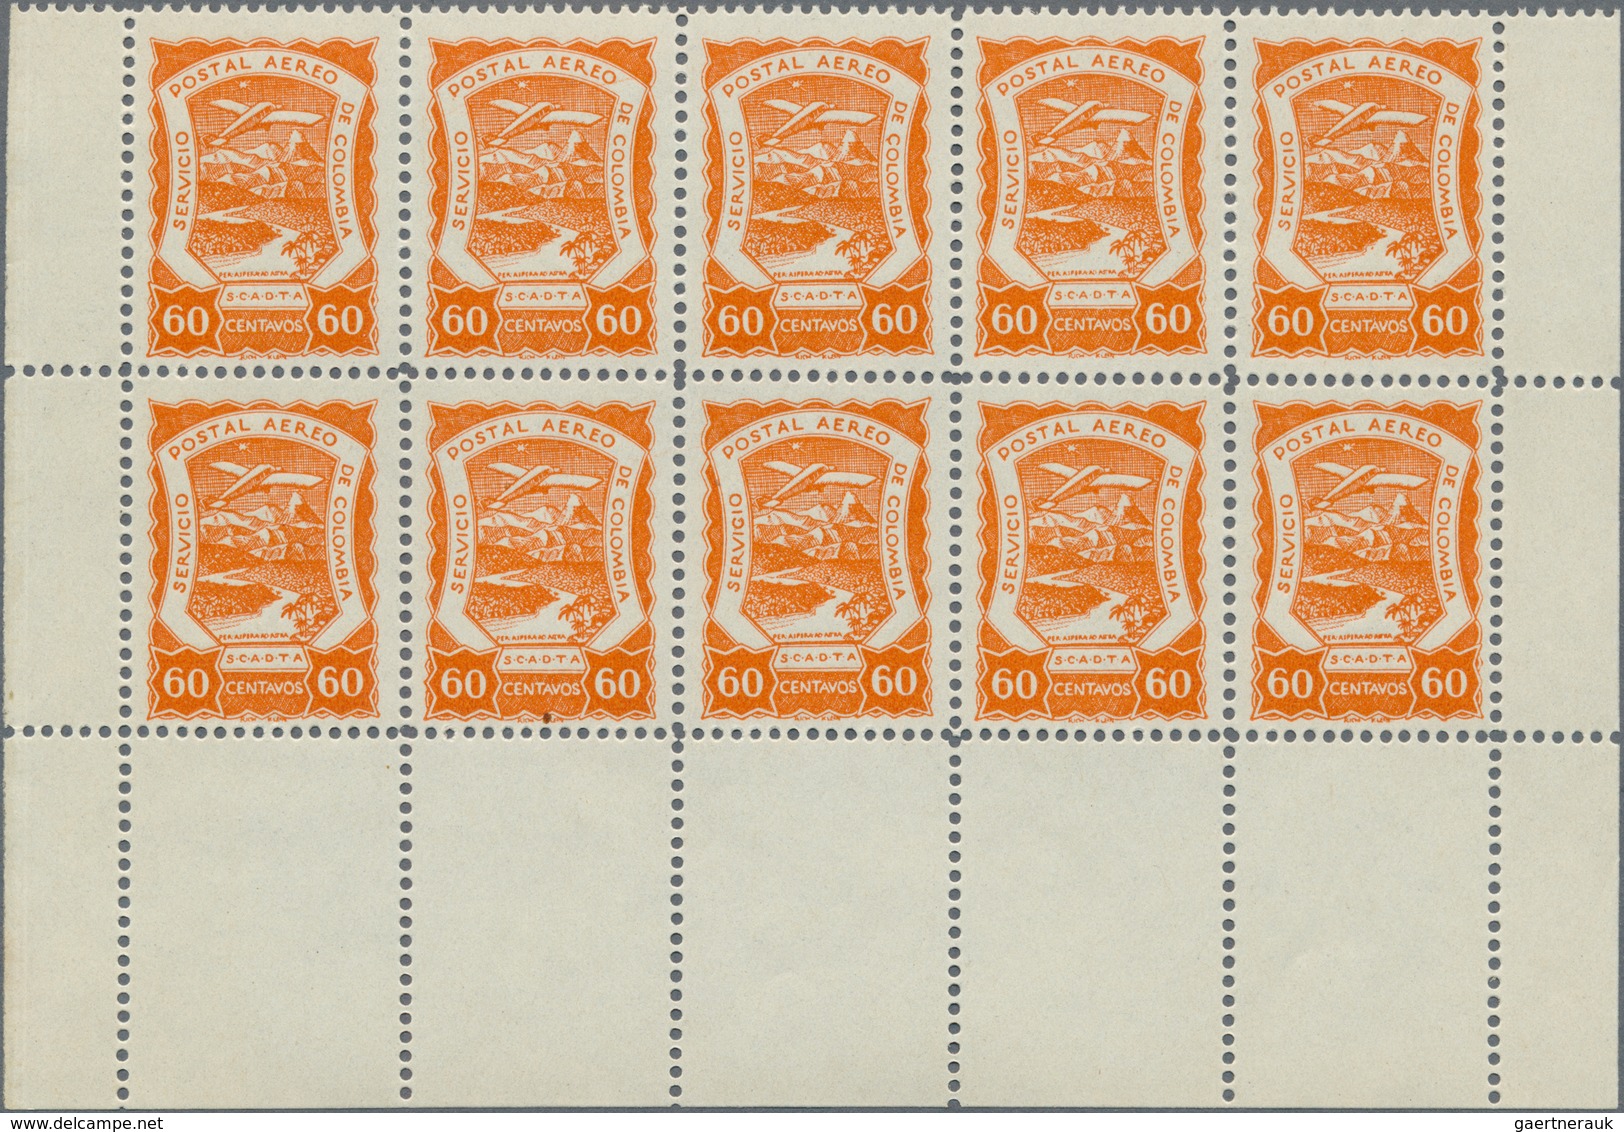 SCADTA - Ausgaben Für Kolumbien: 1923, SERVICIO POSTAL AEREO DE COLOMBIA 60c. Orange-red In An Inves - Kolumbien